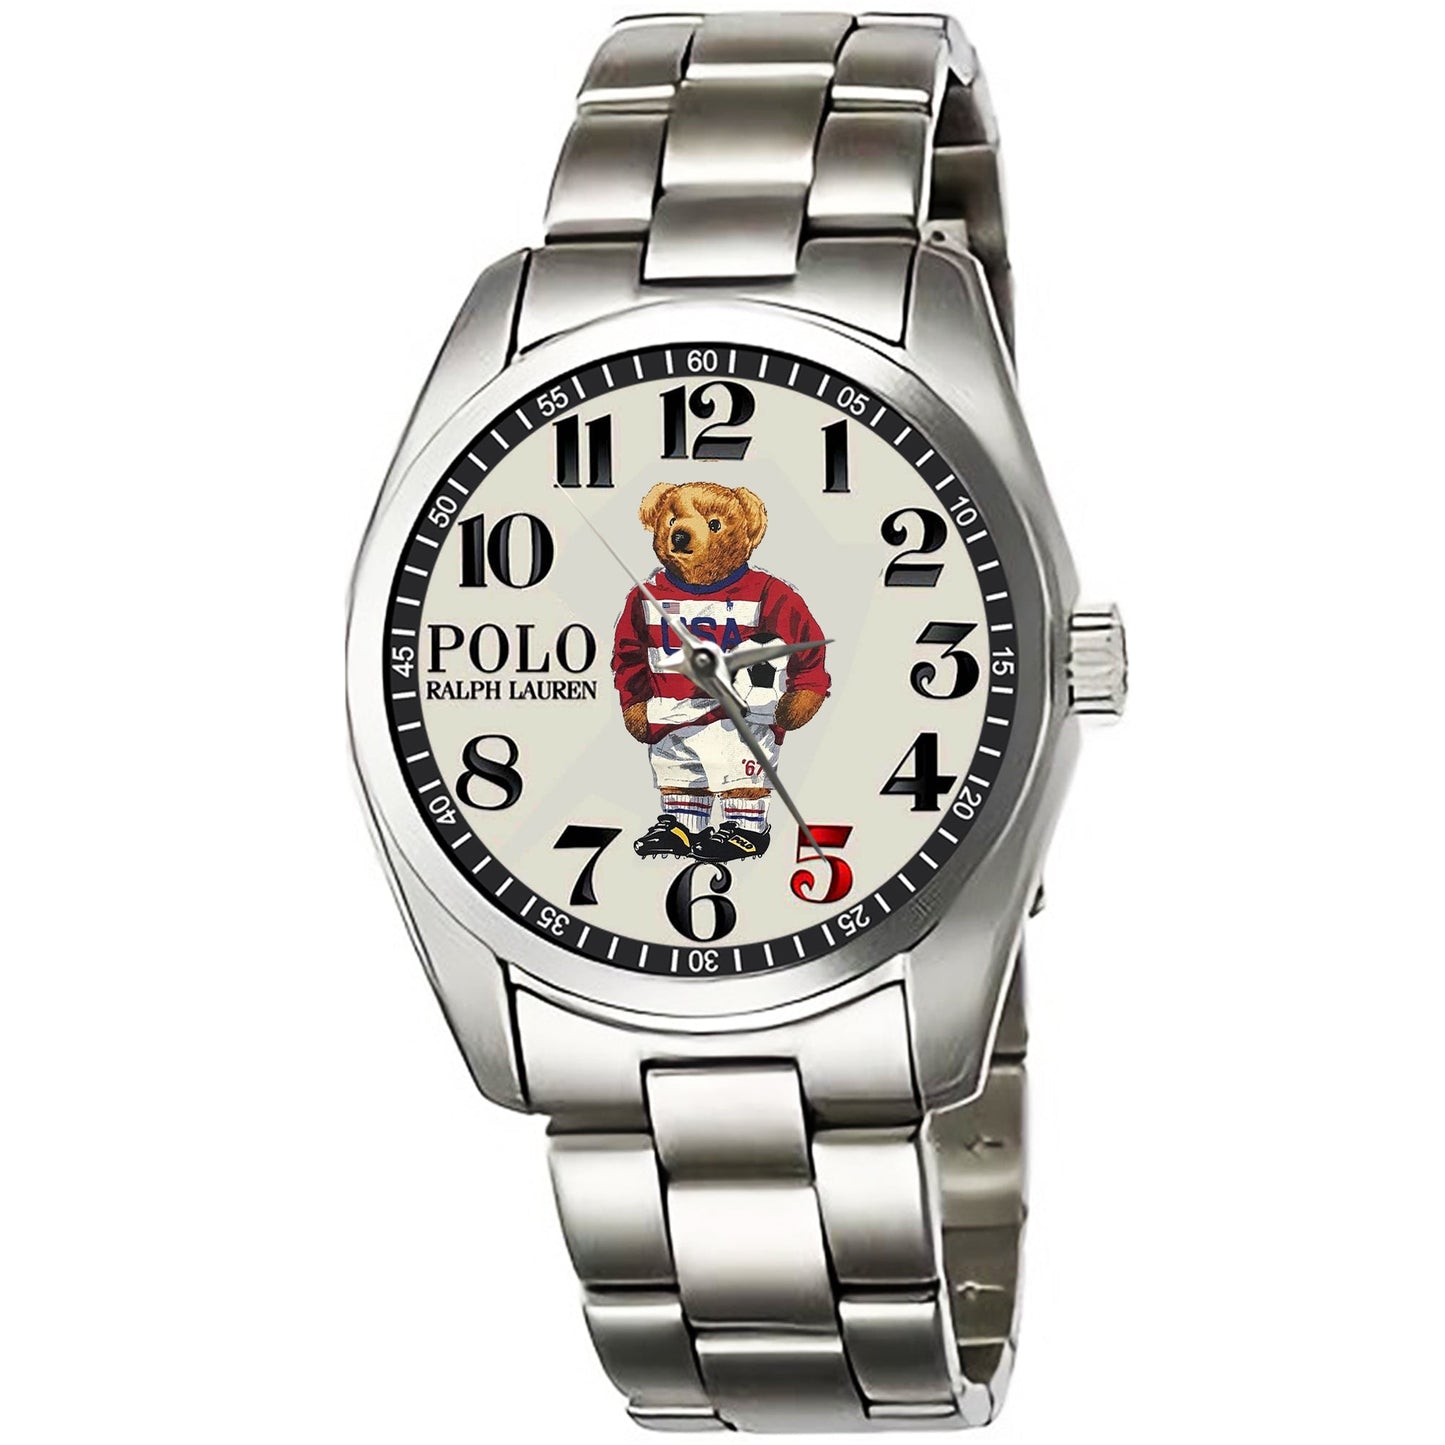 Polo Ralph Lauren Bear Sport Metal Watch YY019